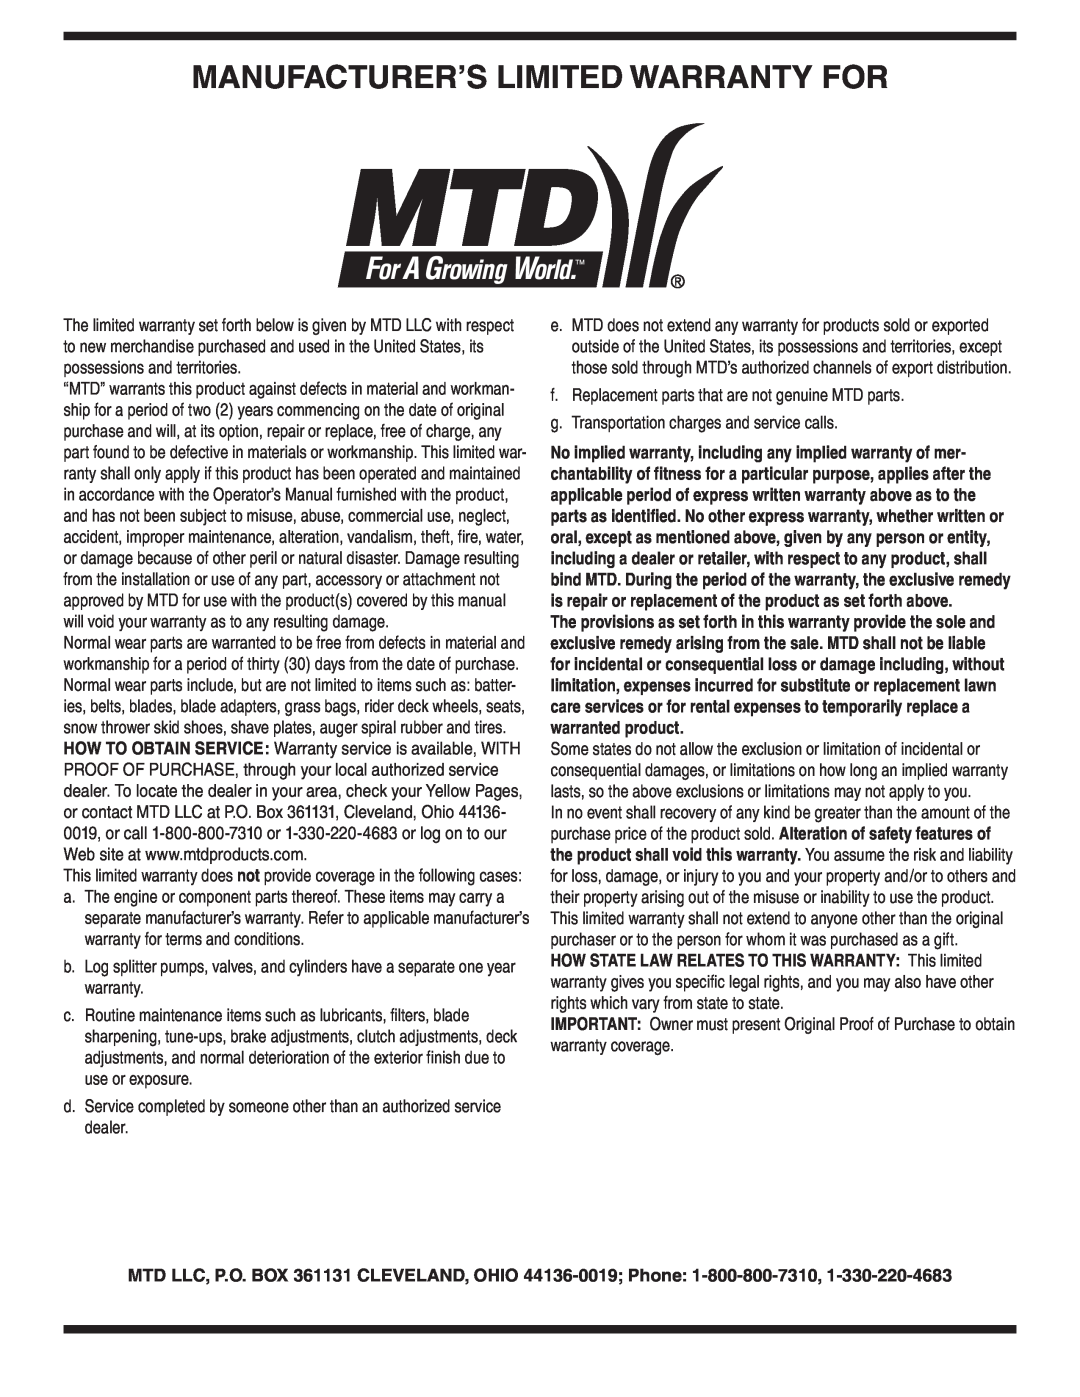 MTD 390 Series warranty Manufacturer’S Limited Warranty For 